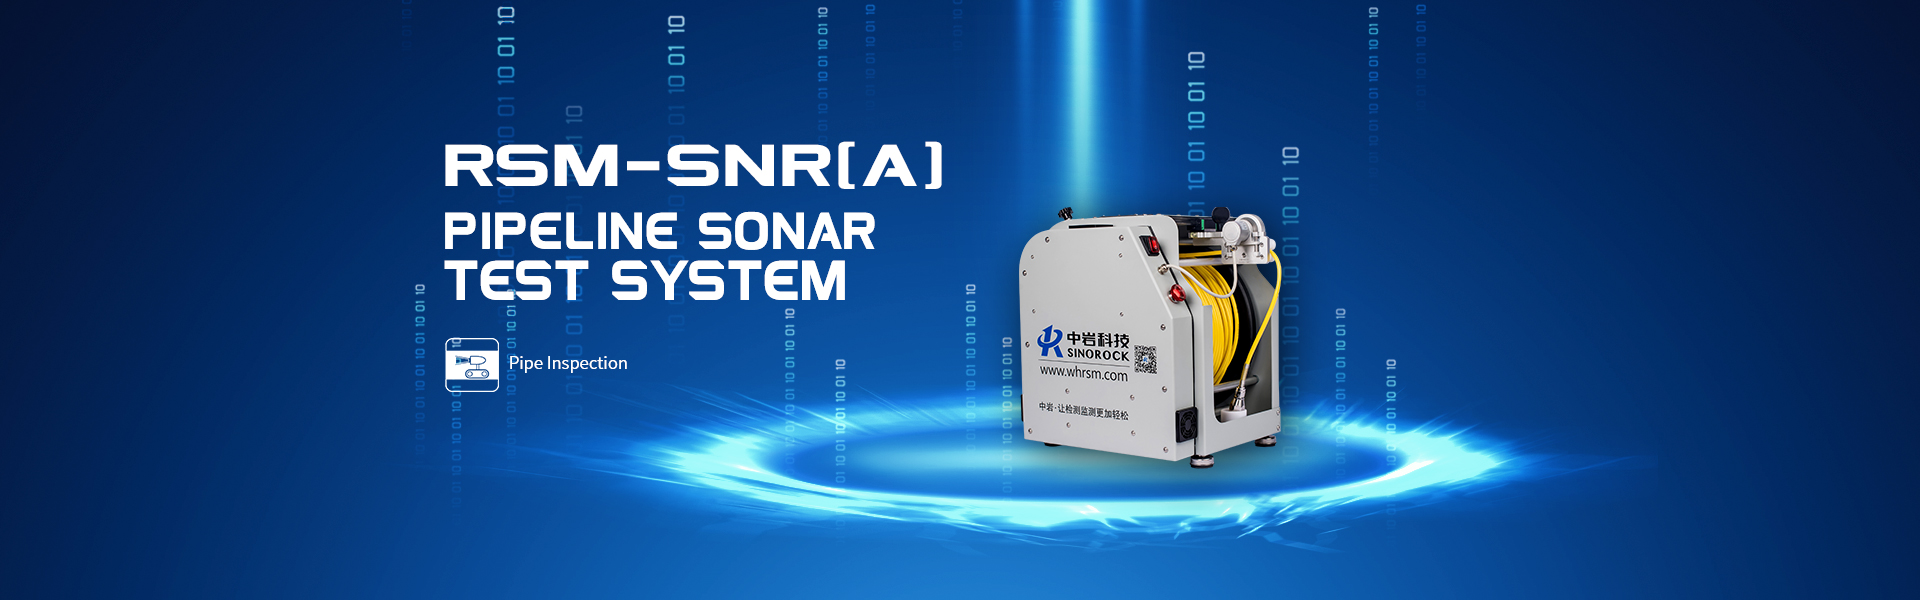 RSM-SNR(A) Pipeline Sonar Test System